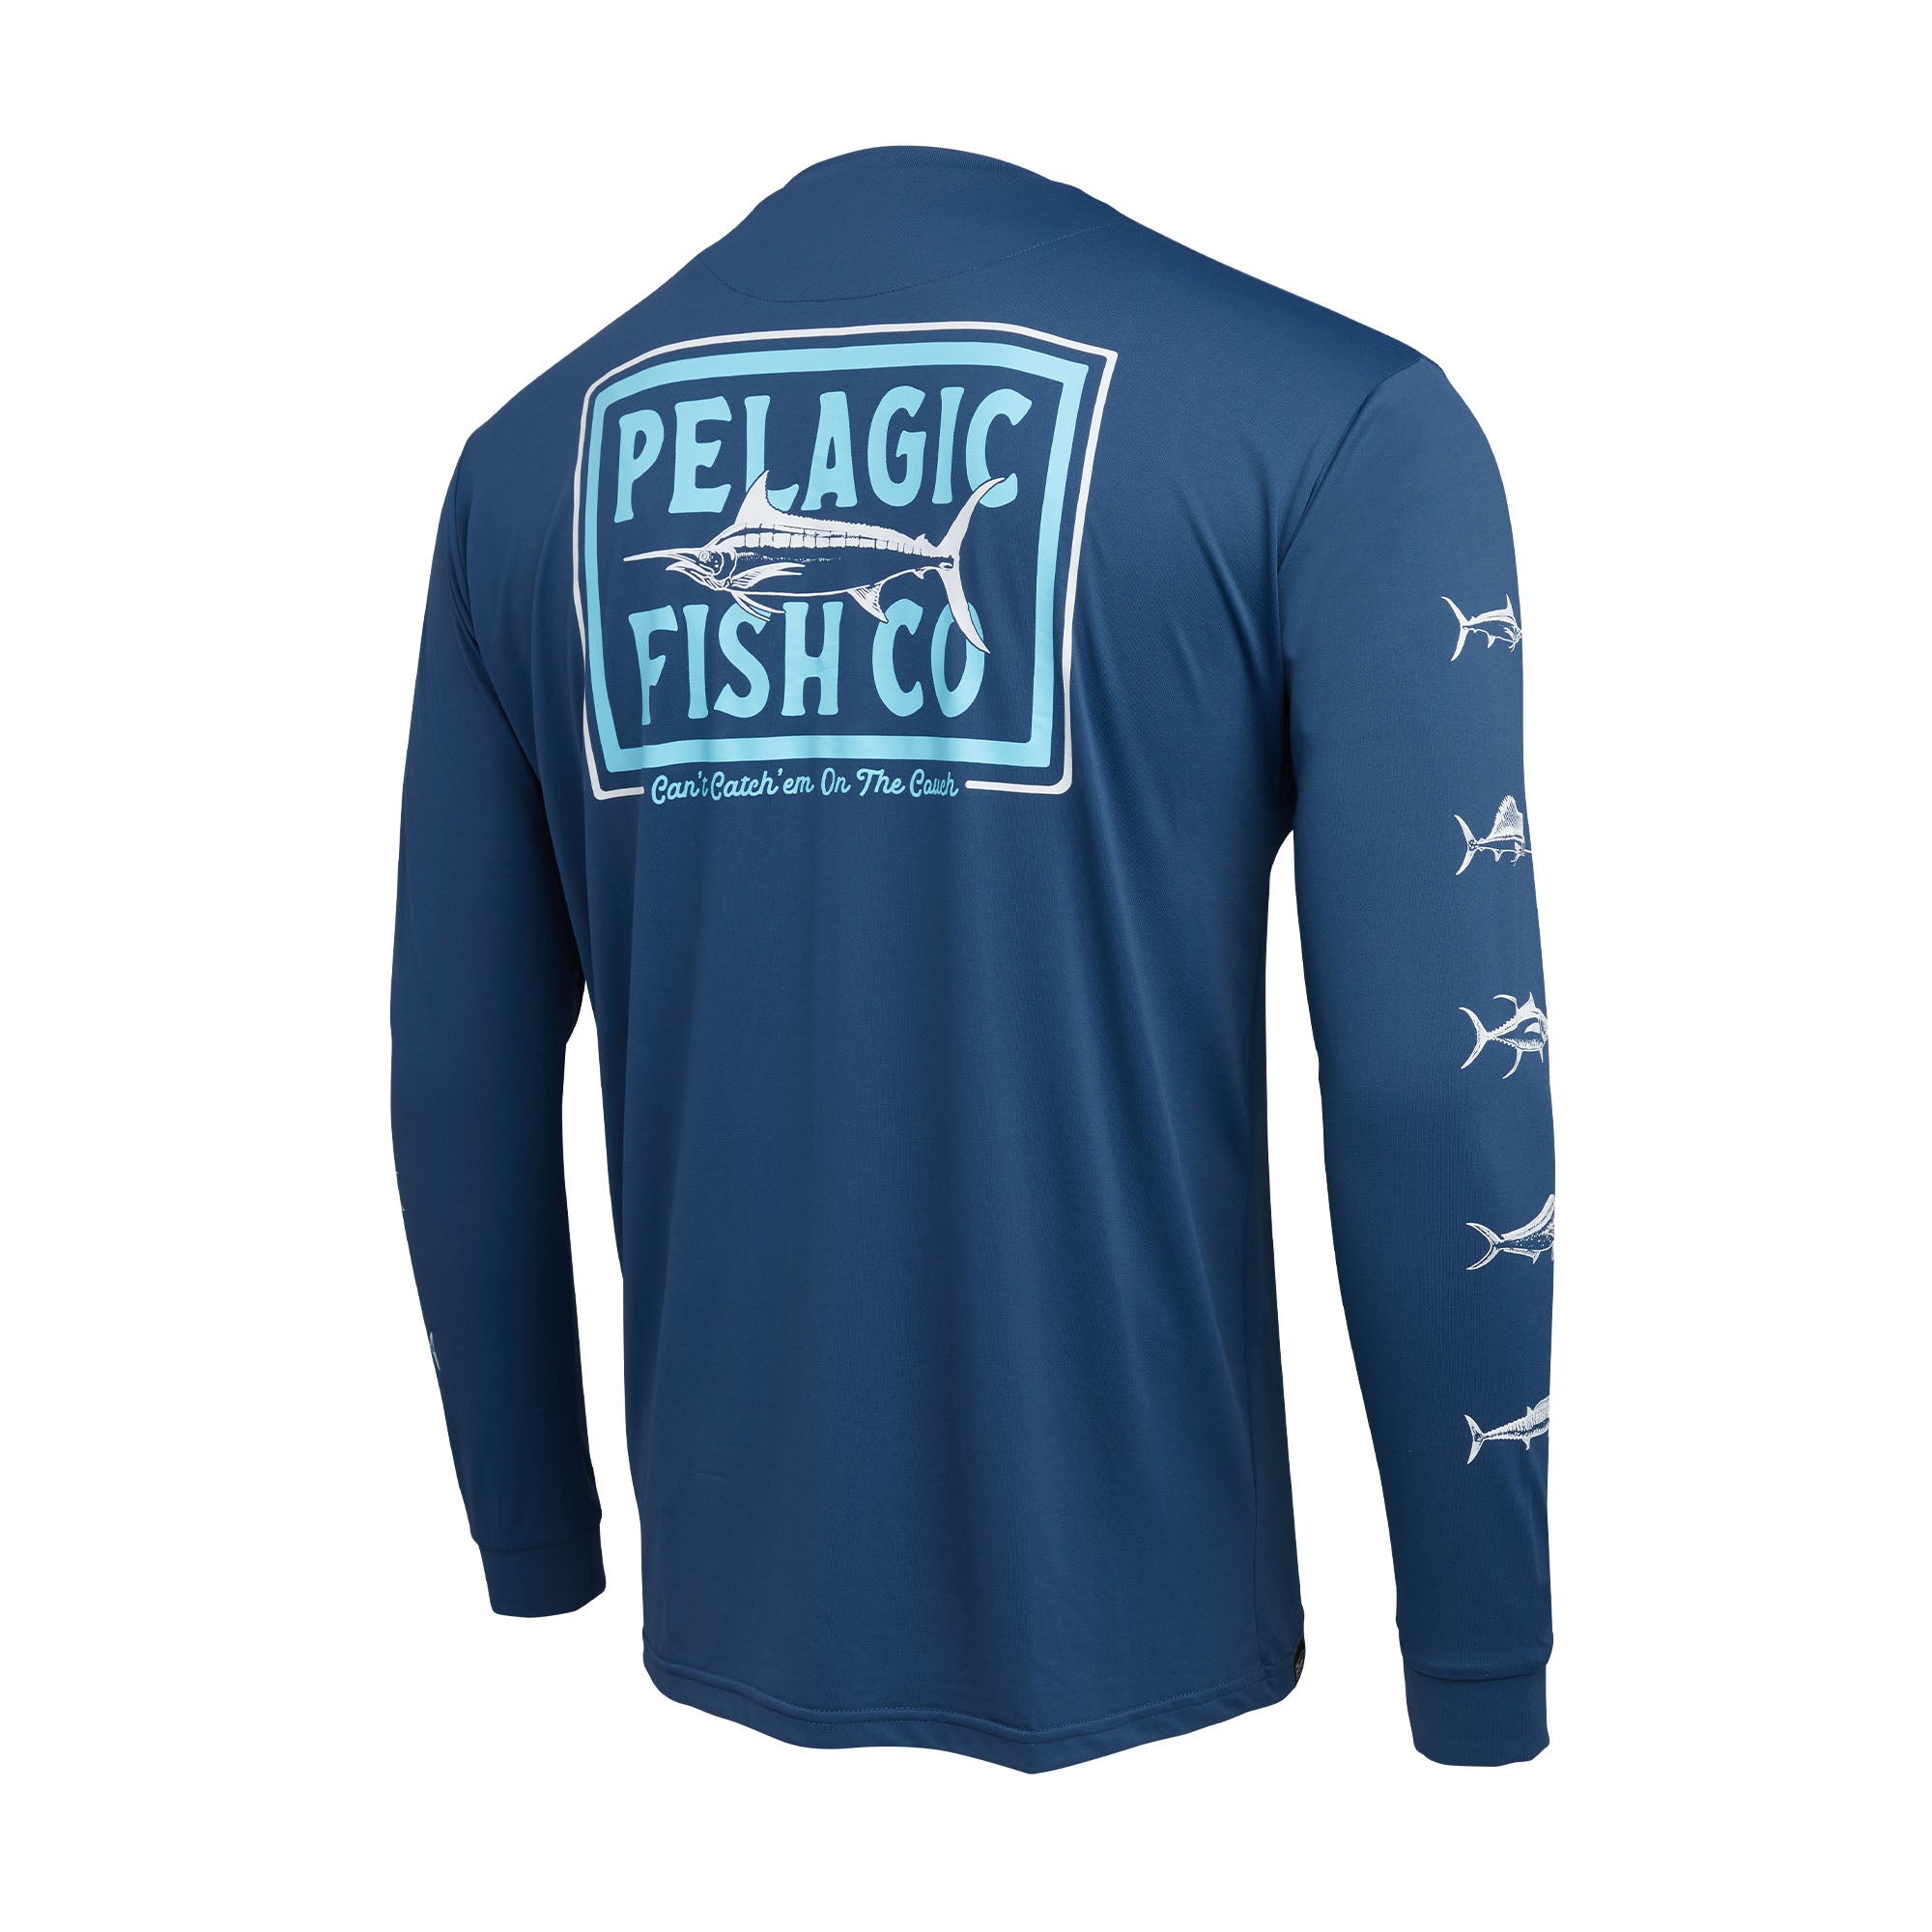 Aquatek Couched Fishing Shirt